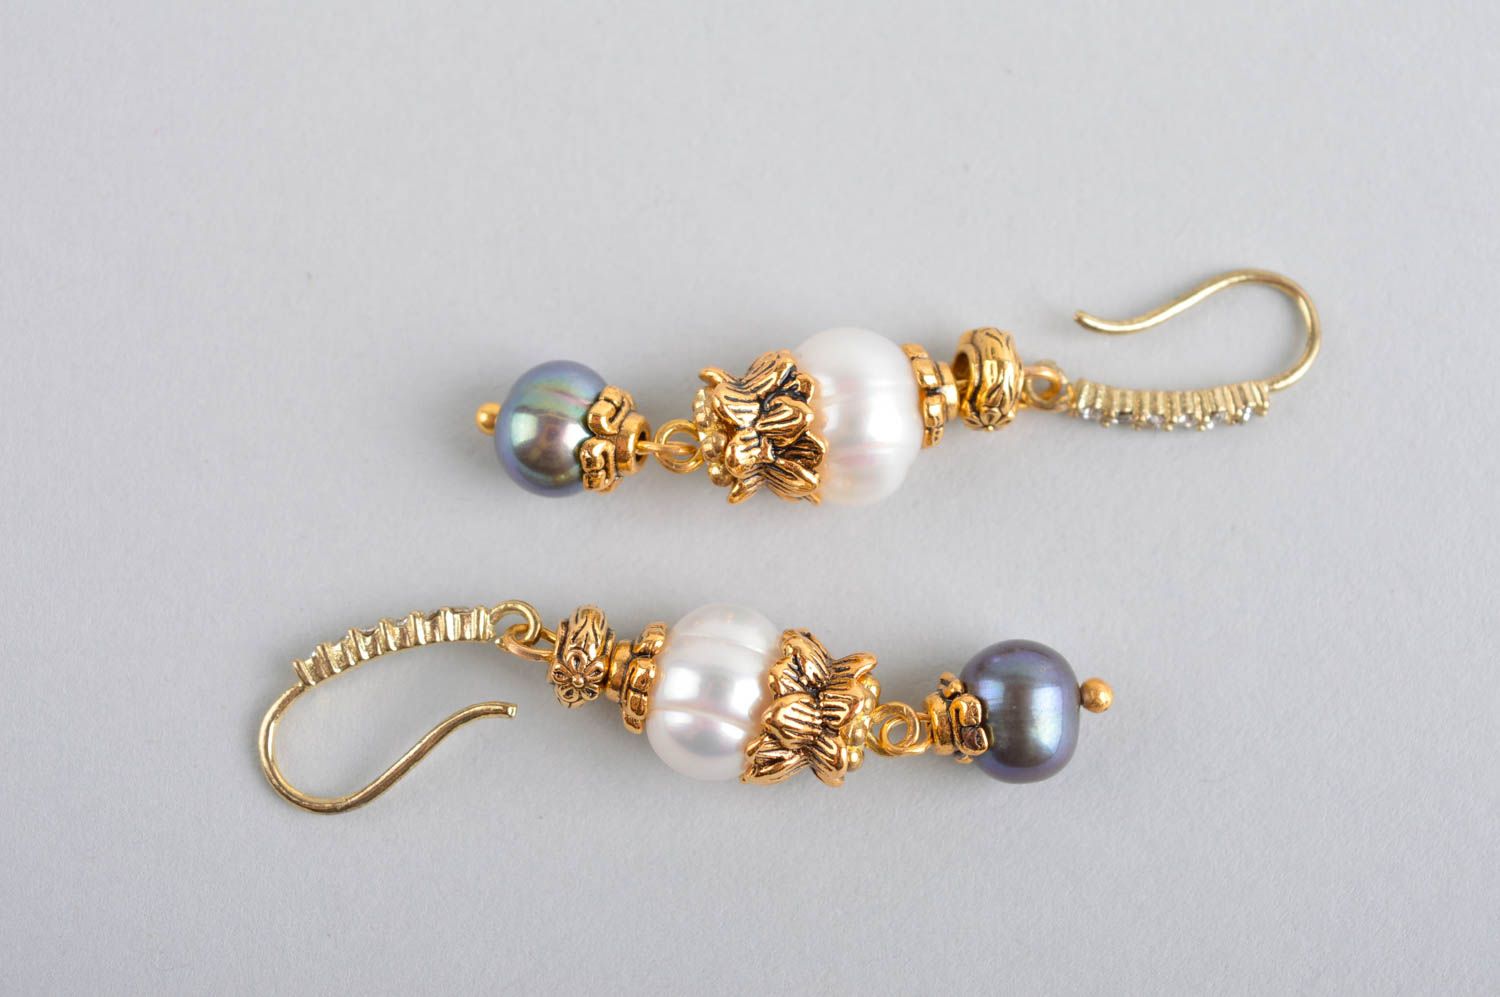 Handmade earrings long earrings fashion jewelry designer accessories gift ideas photo 5